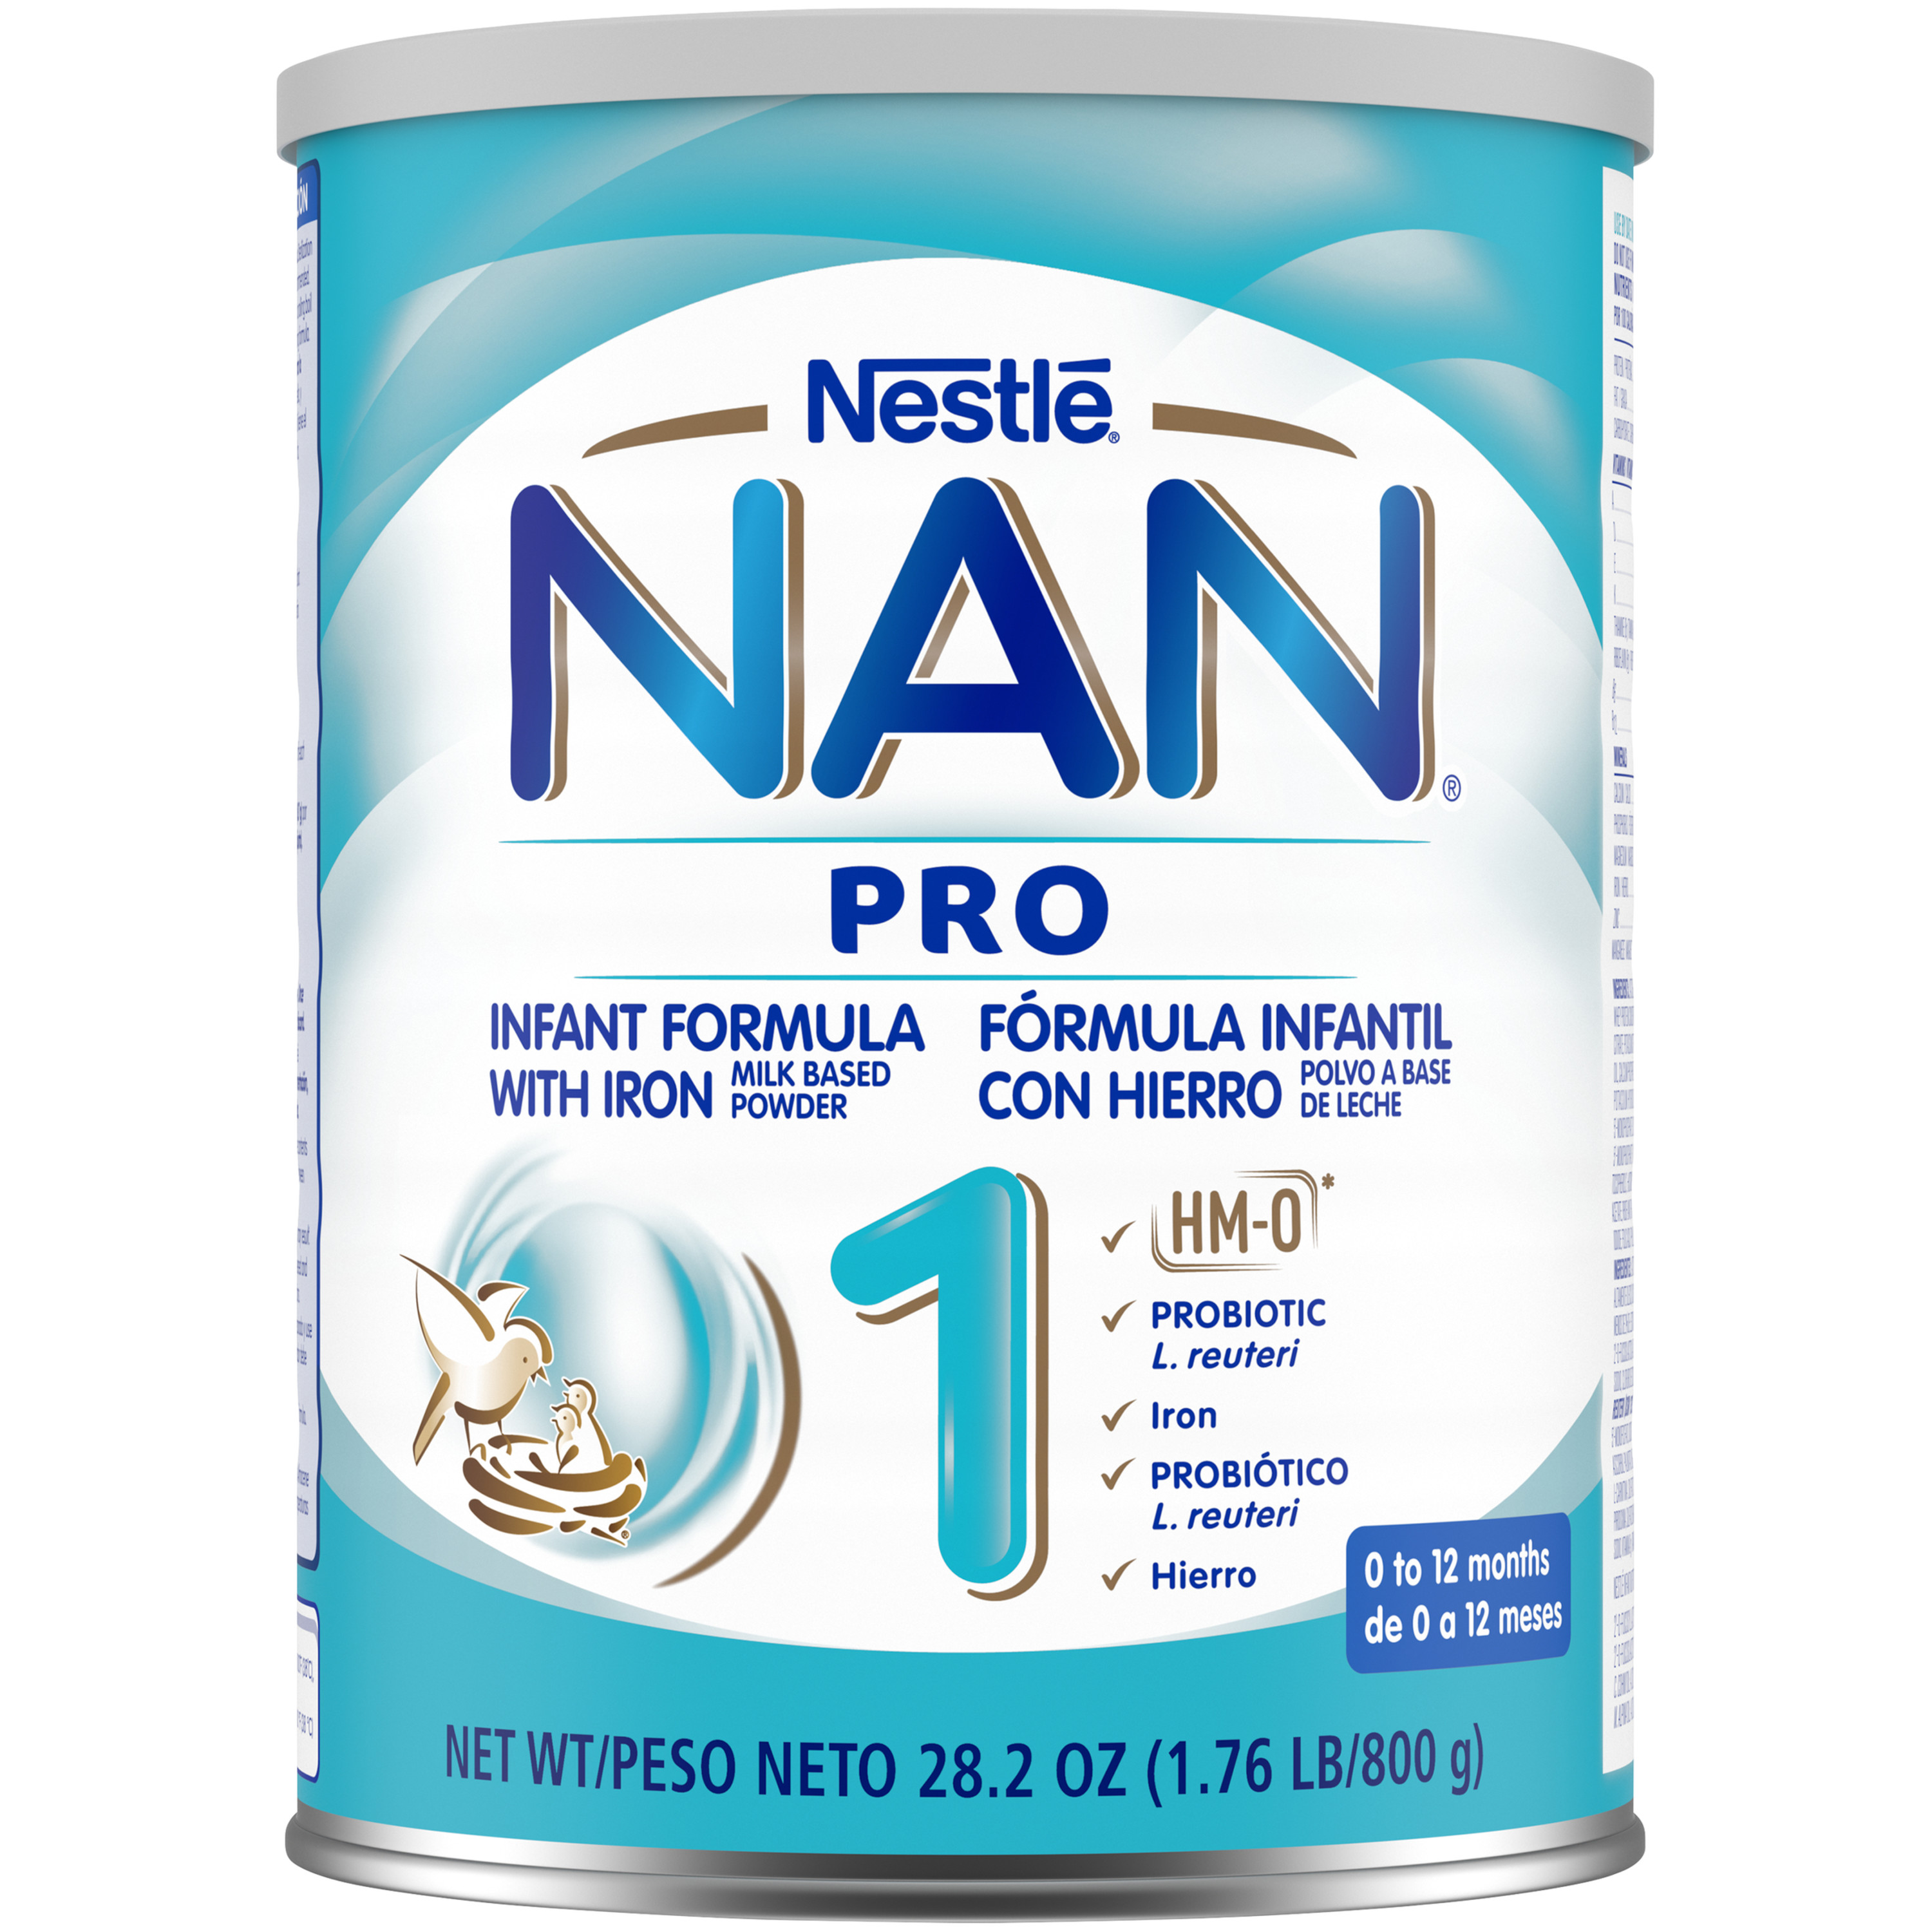 Gerber Nan Pro Infant Powder 28.2oz - image 1 of 9